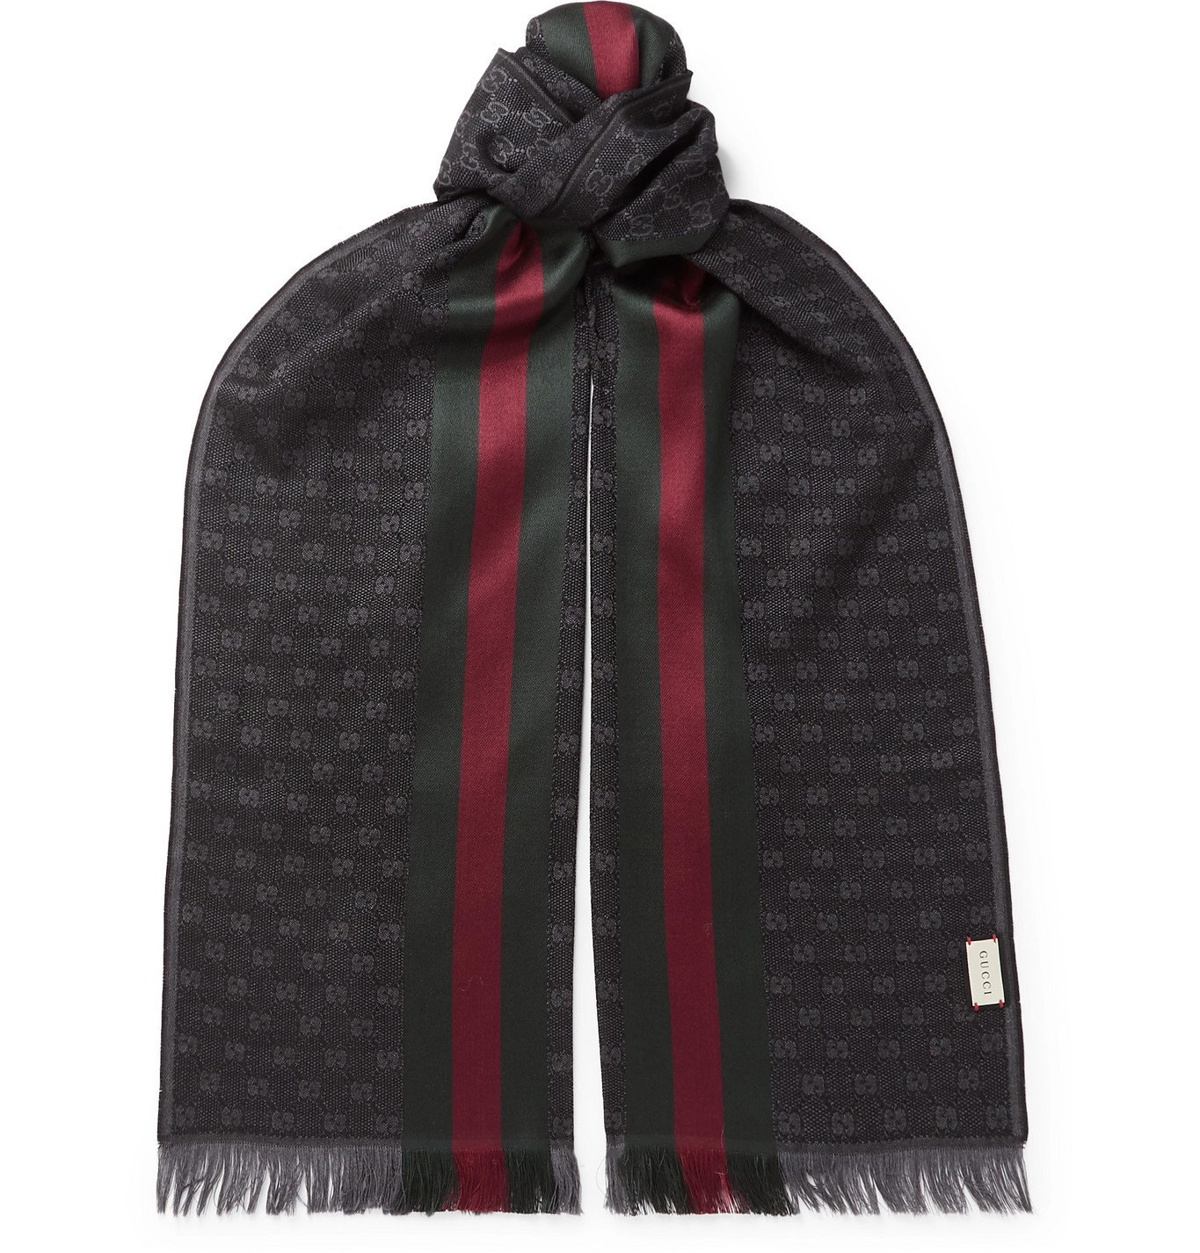 GG jacquard wool silk scarf in light grey